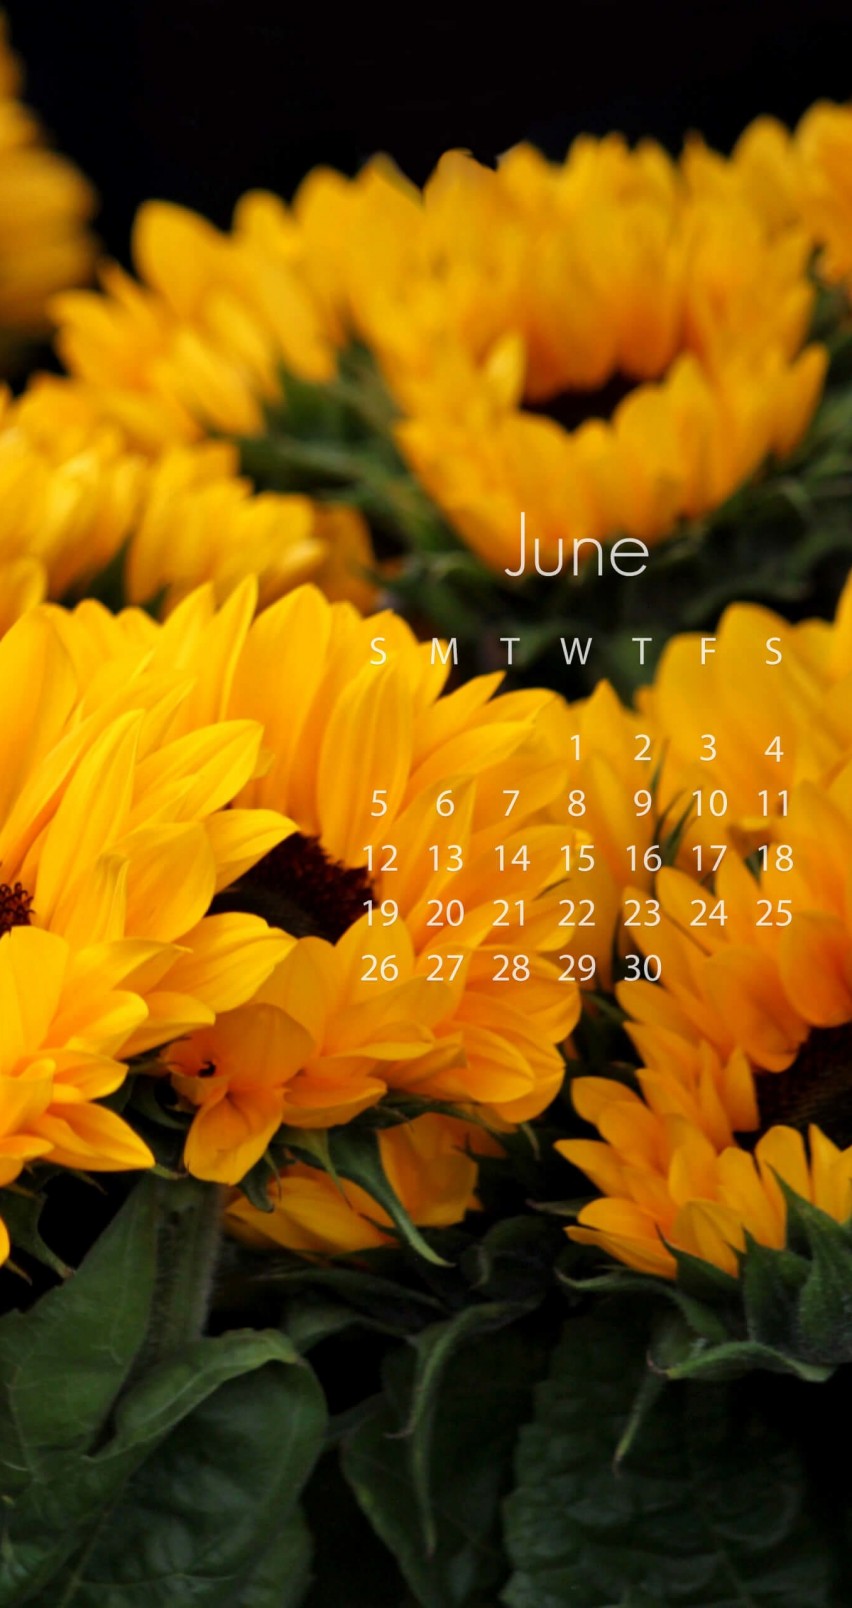 June 2016 Calendar Wallpaper for Apple iPhone 6 / 6s